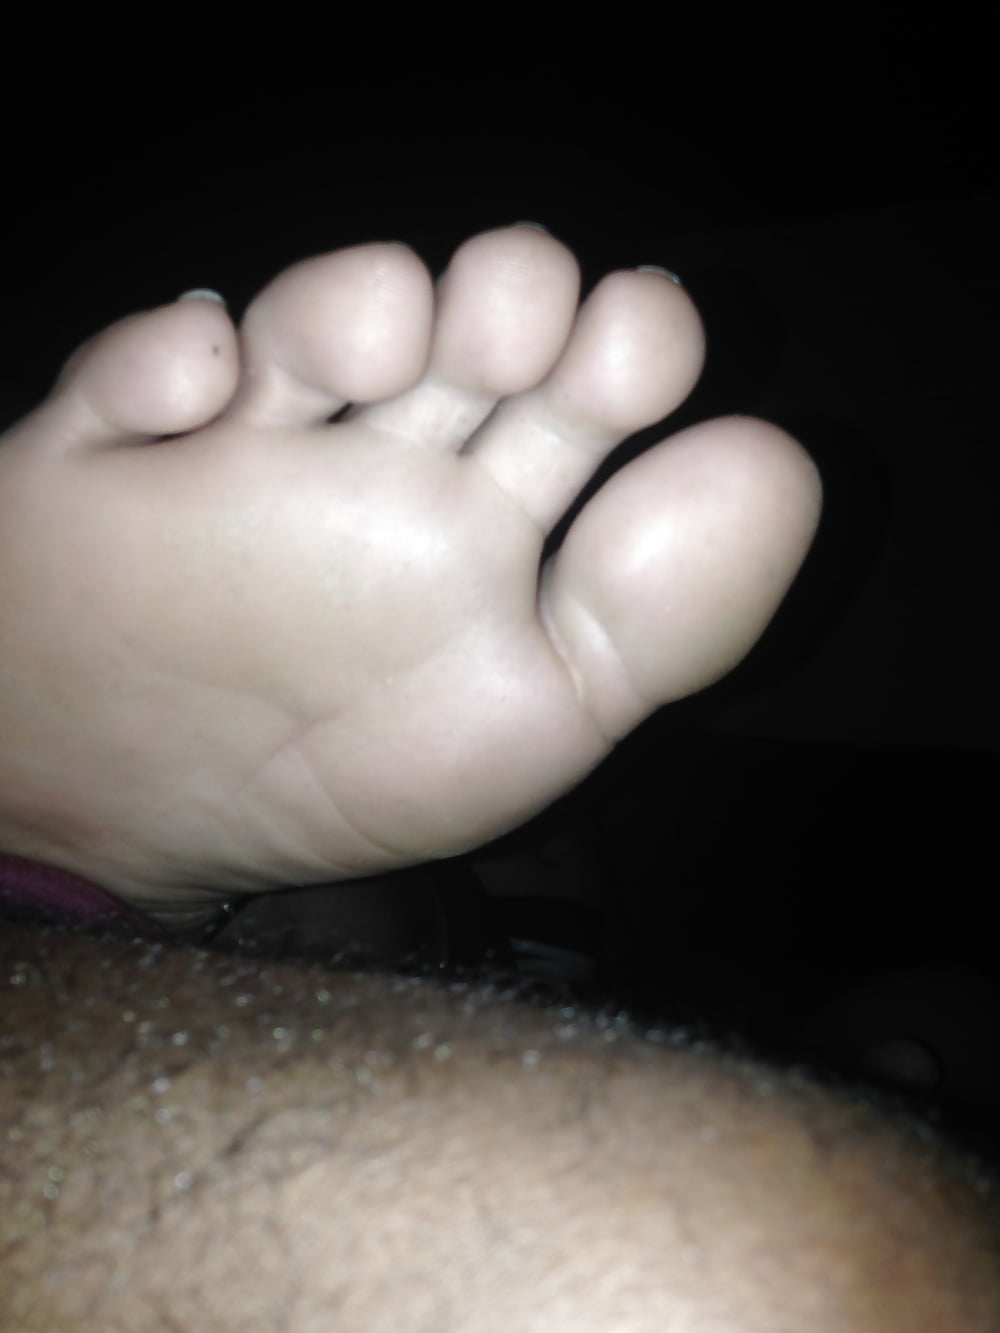 My Latina's feet porn gallery